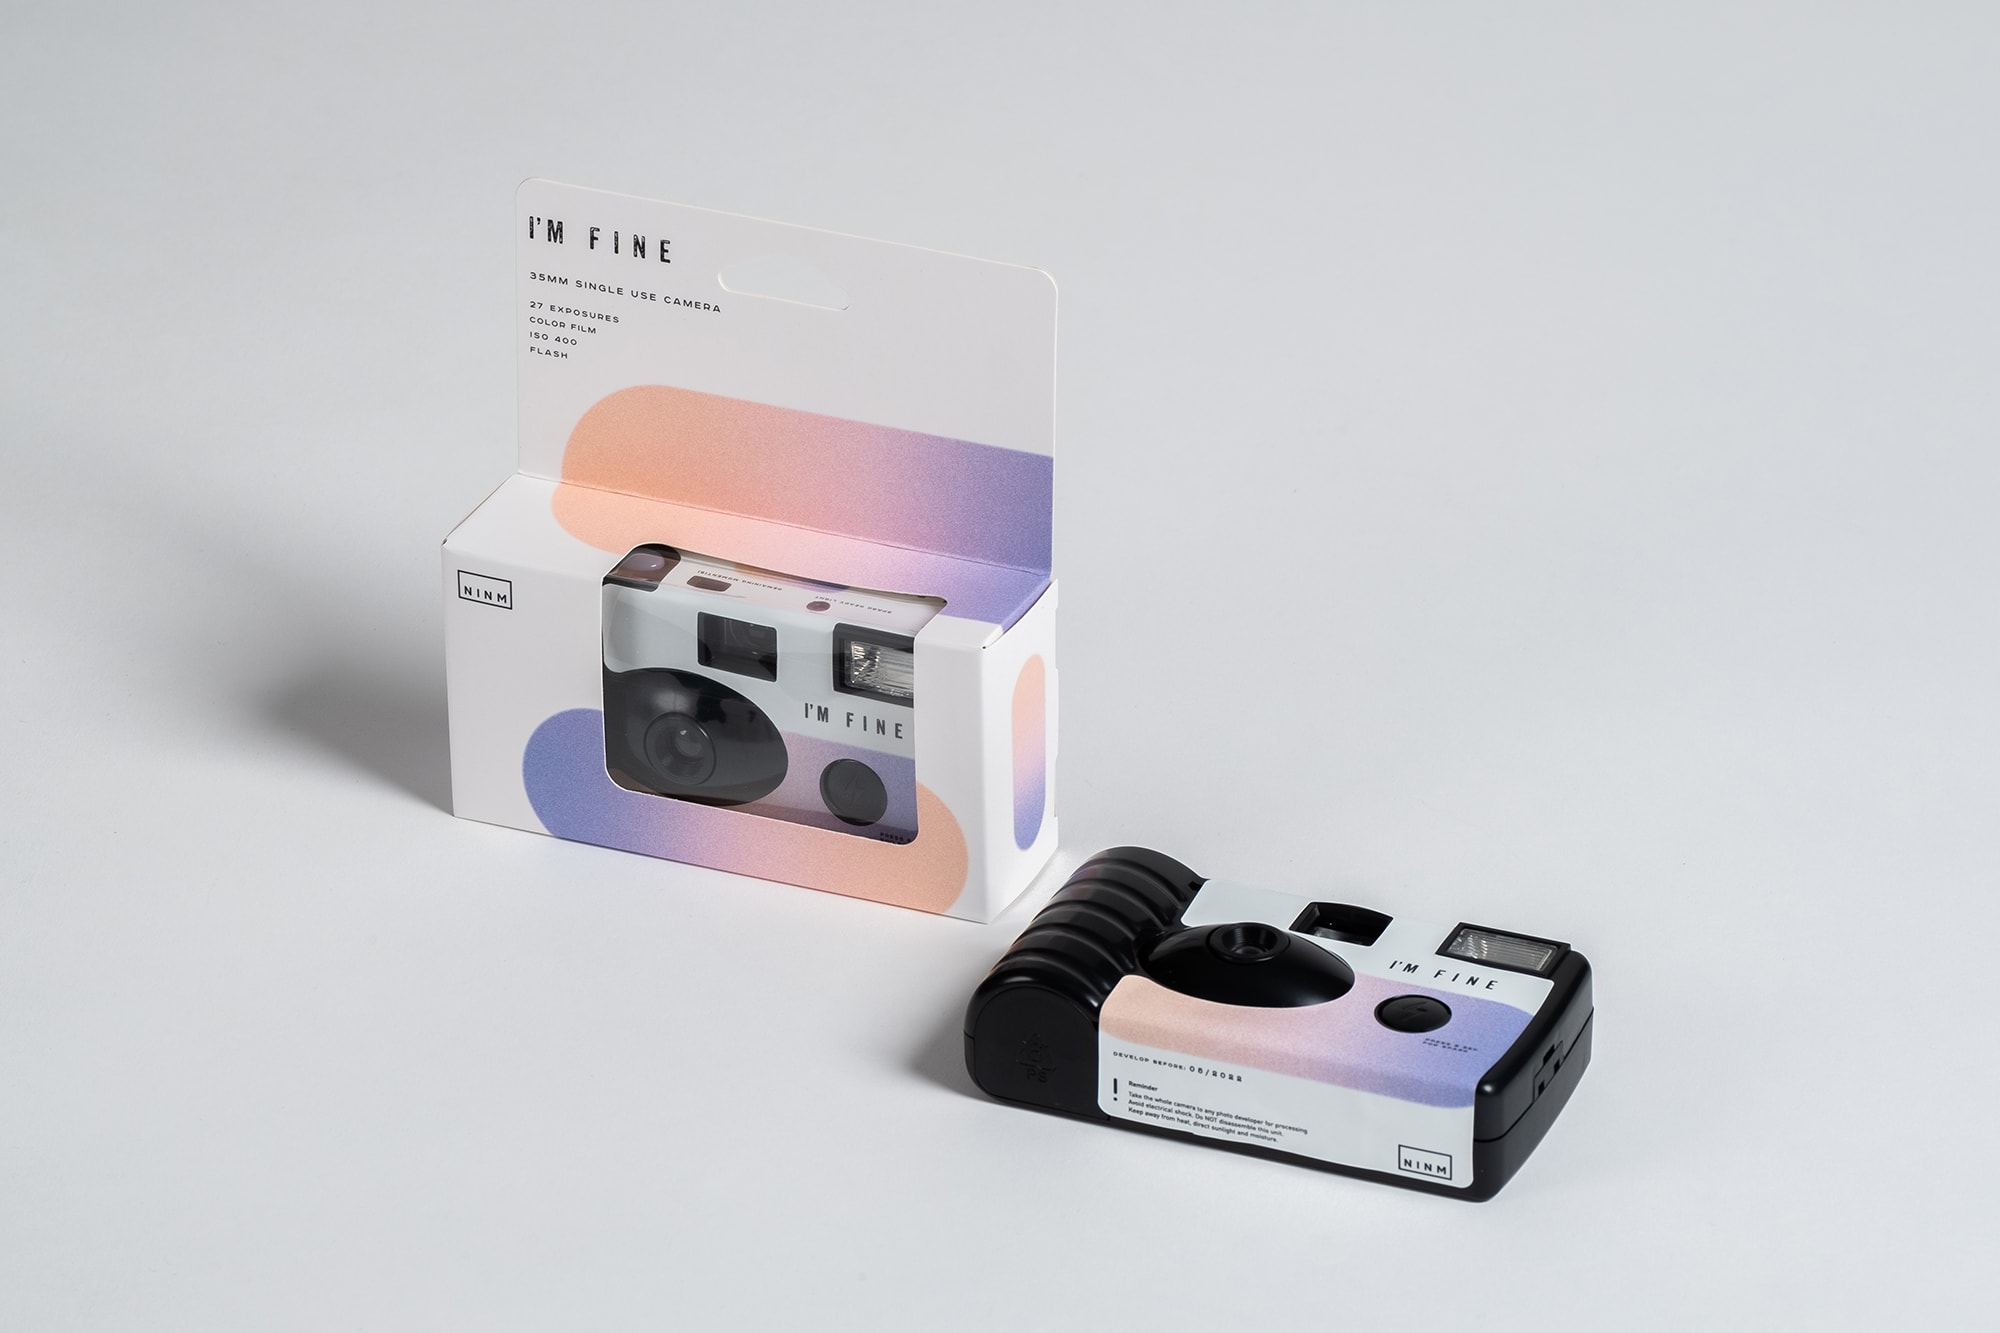 NINM Lab 三代目「I'M FINE」菲林相機正式發佈